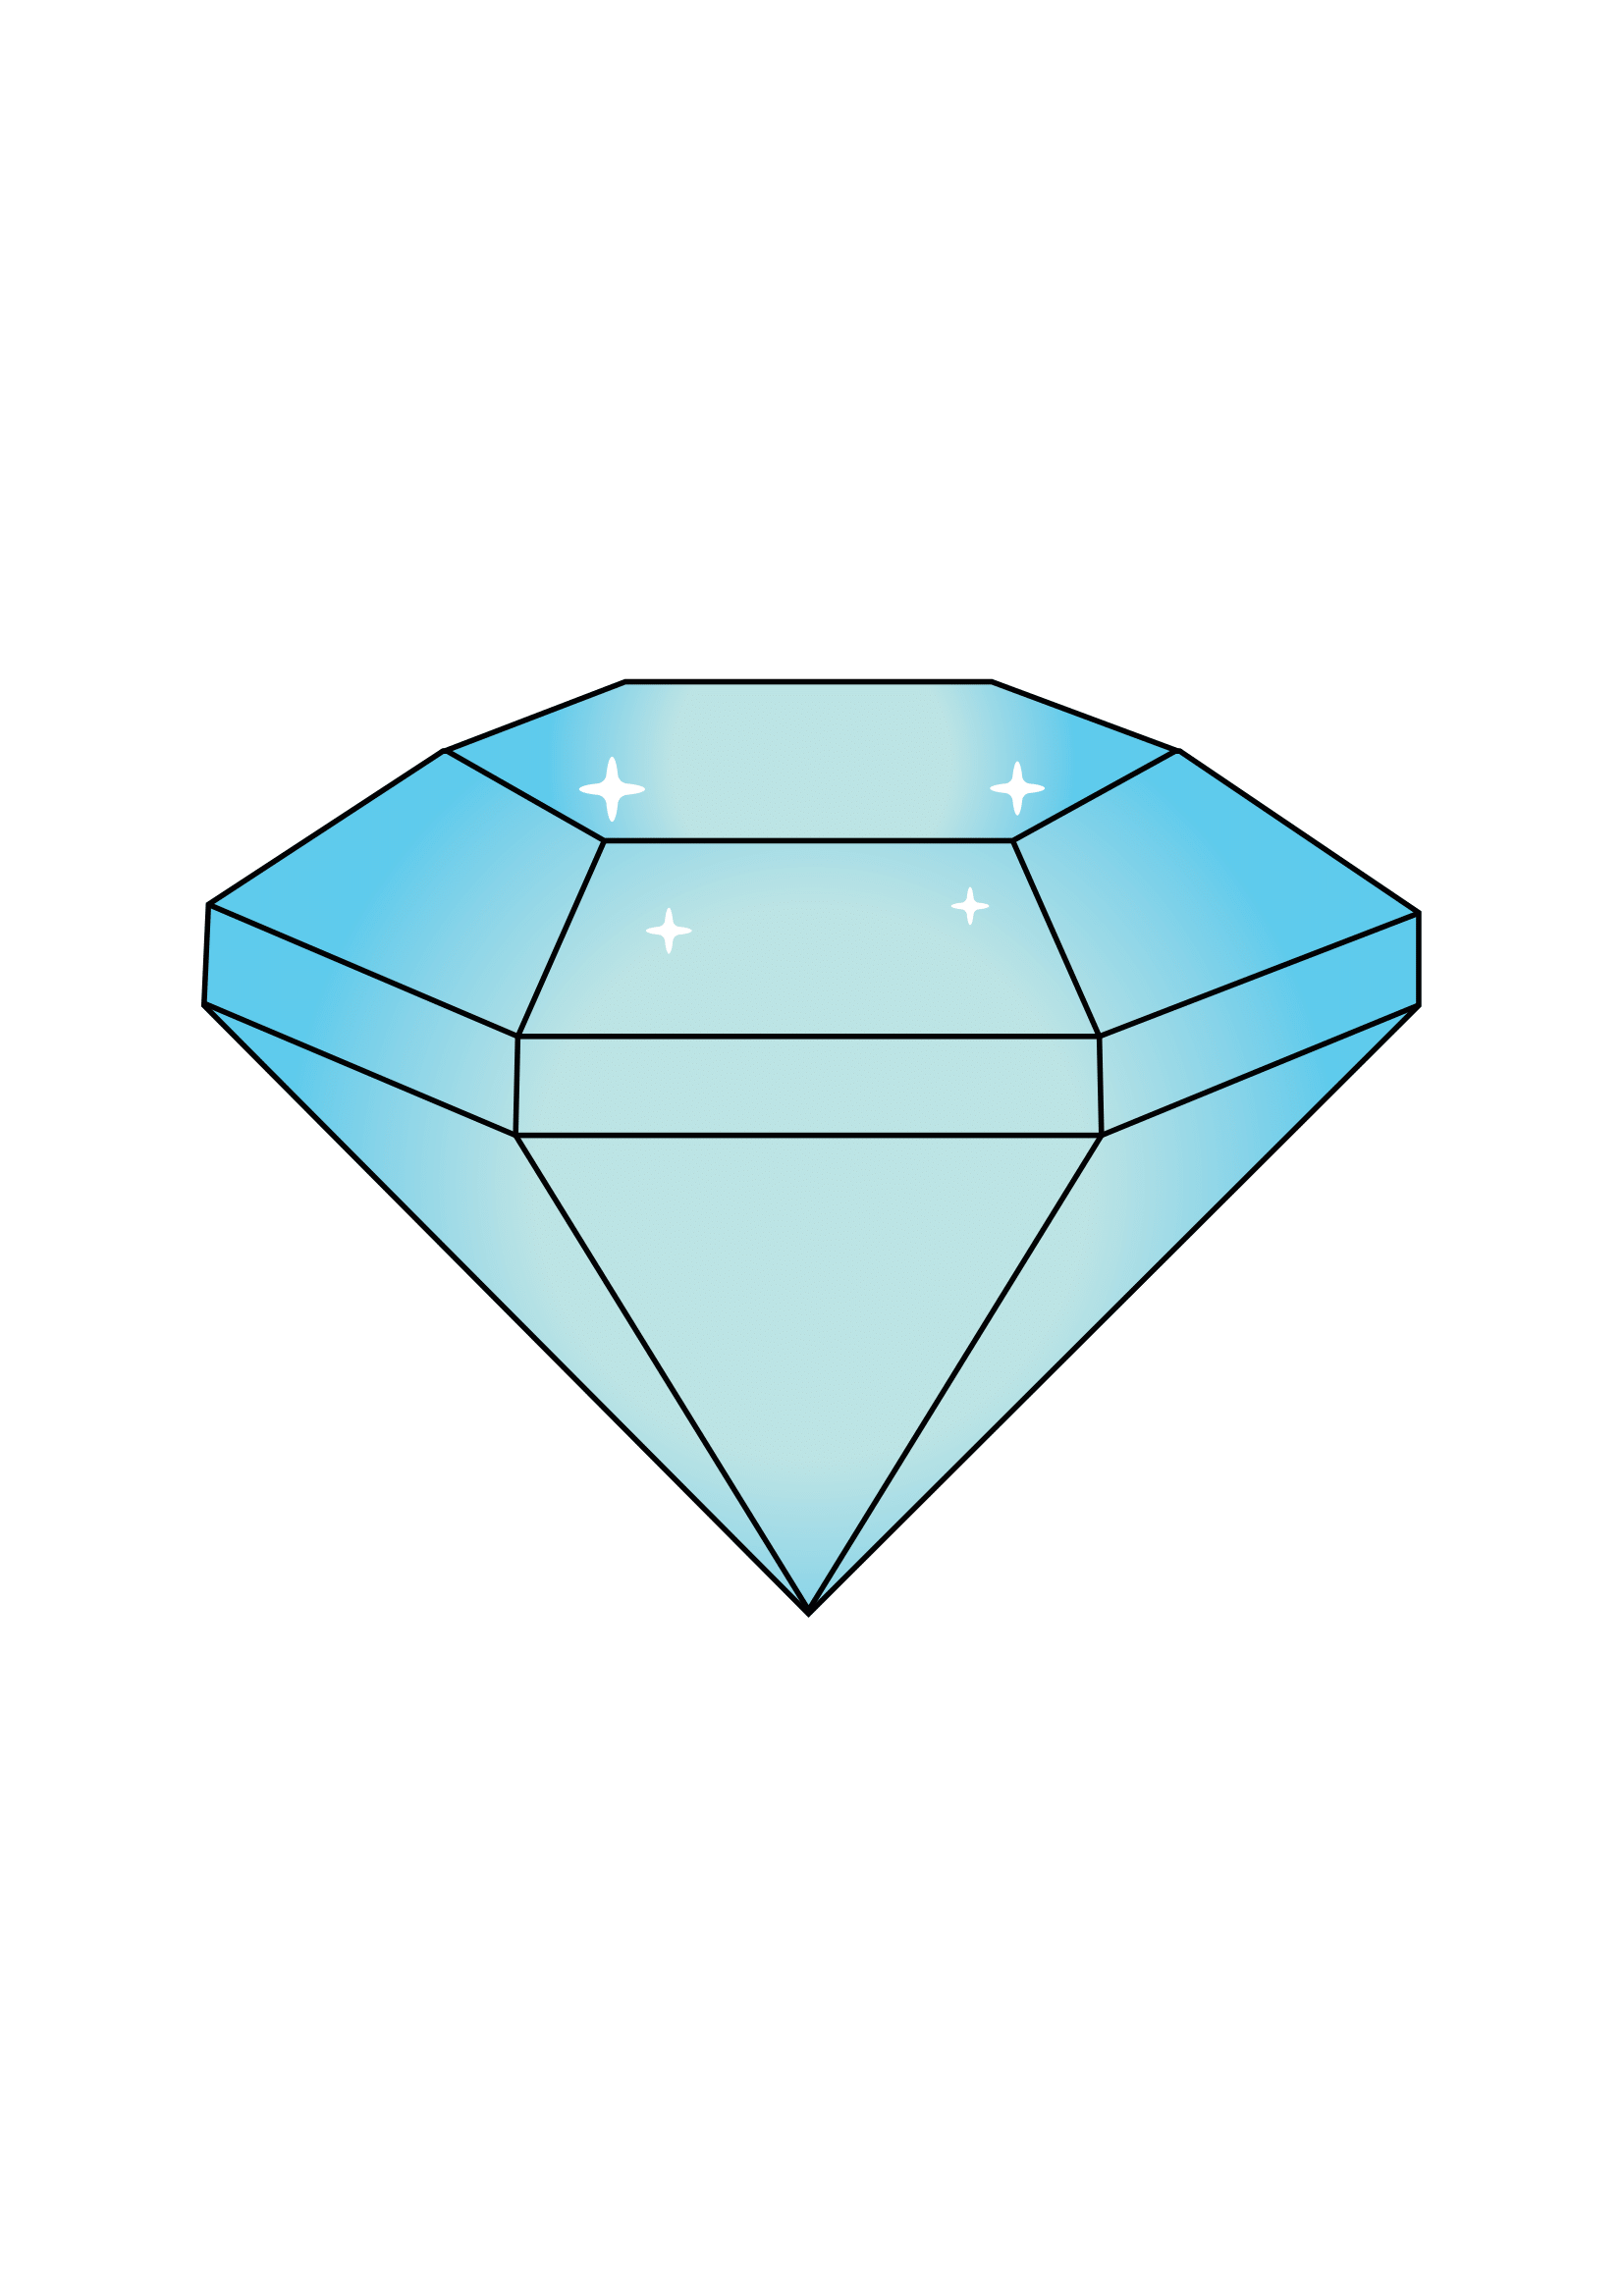 How to Draw A Diamond Step by Step Printable